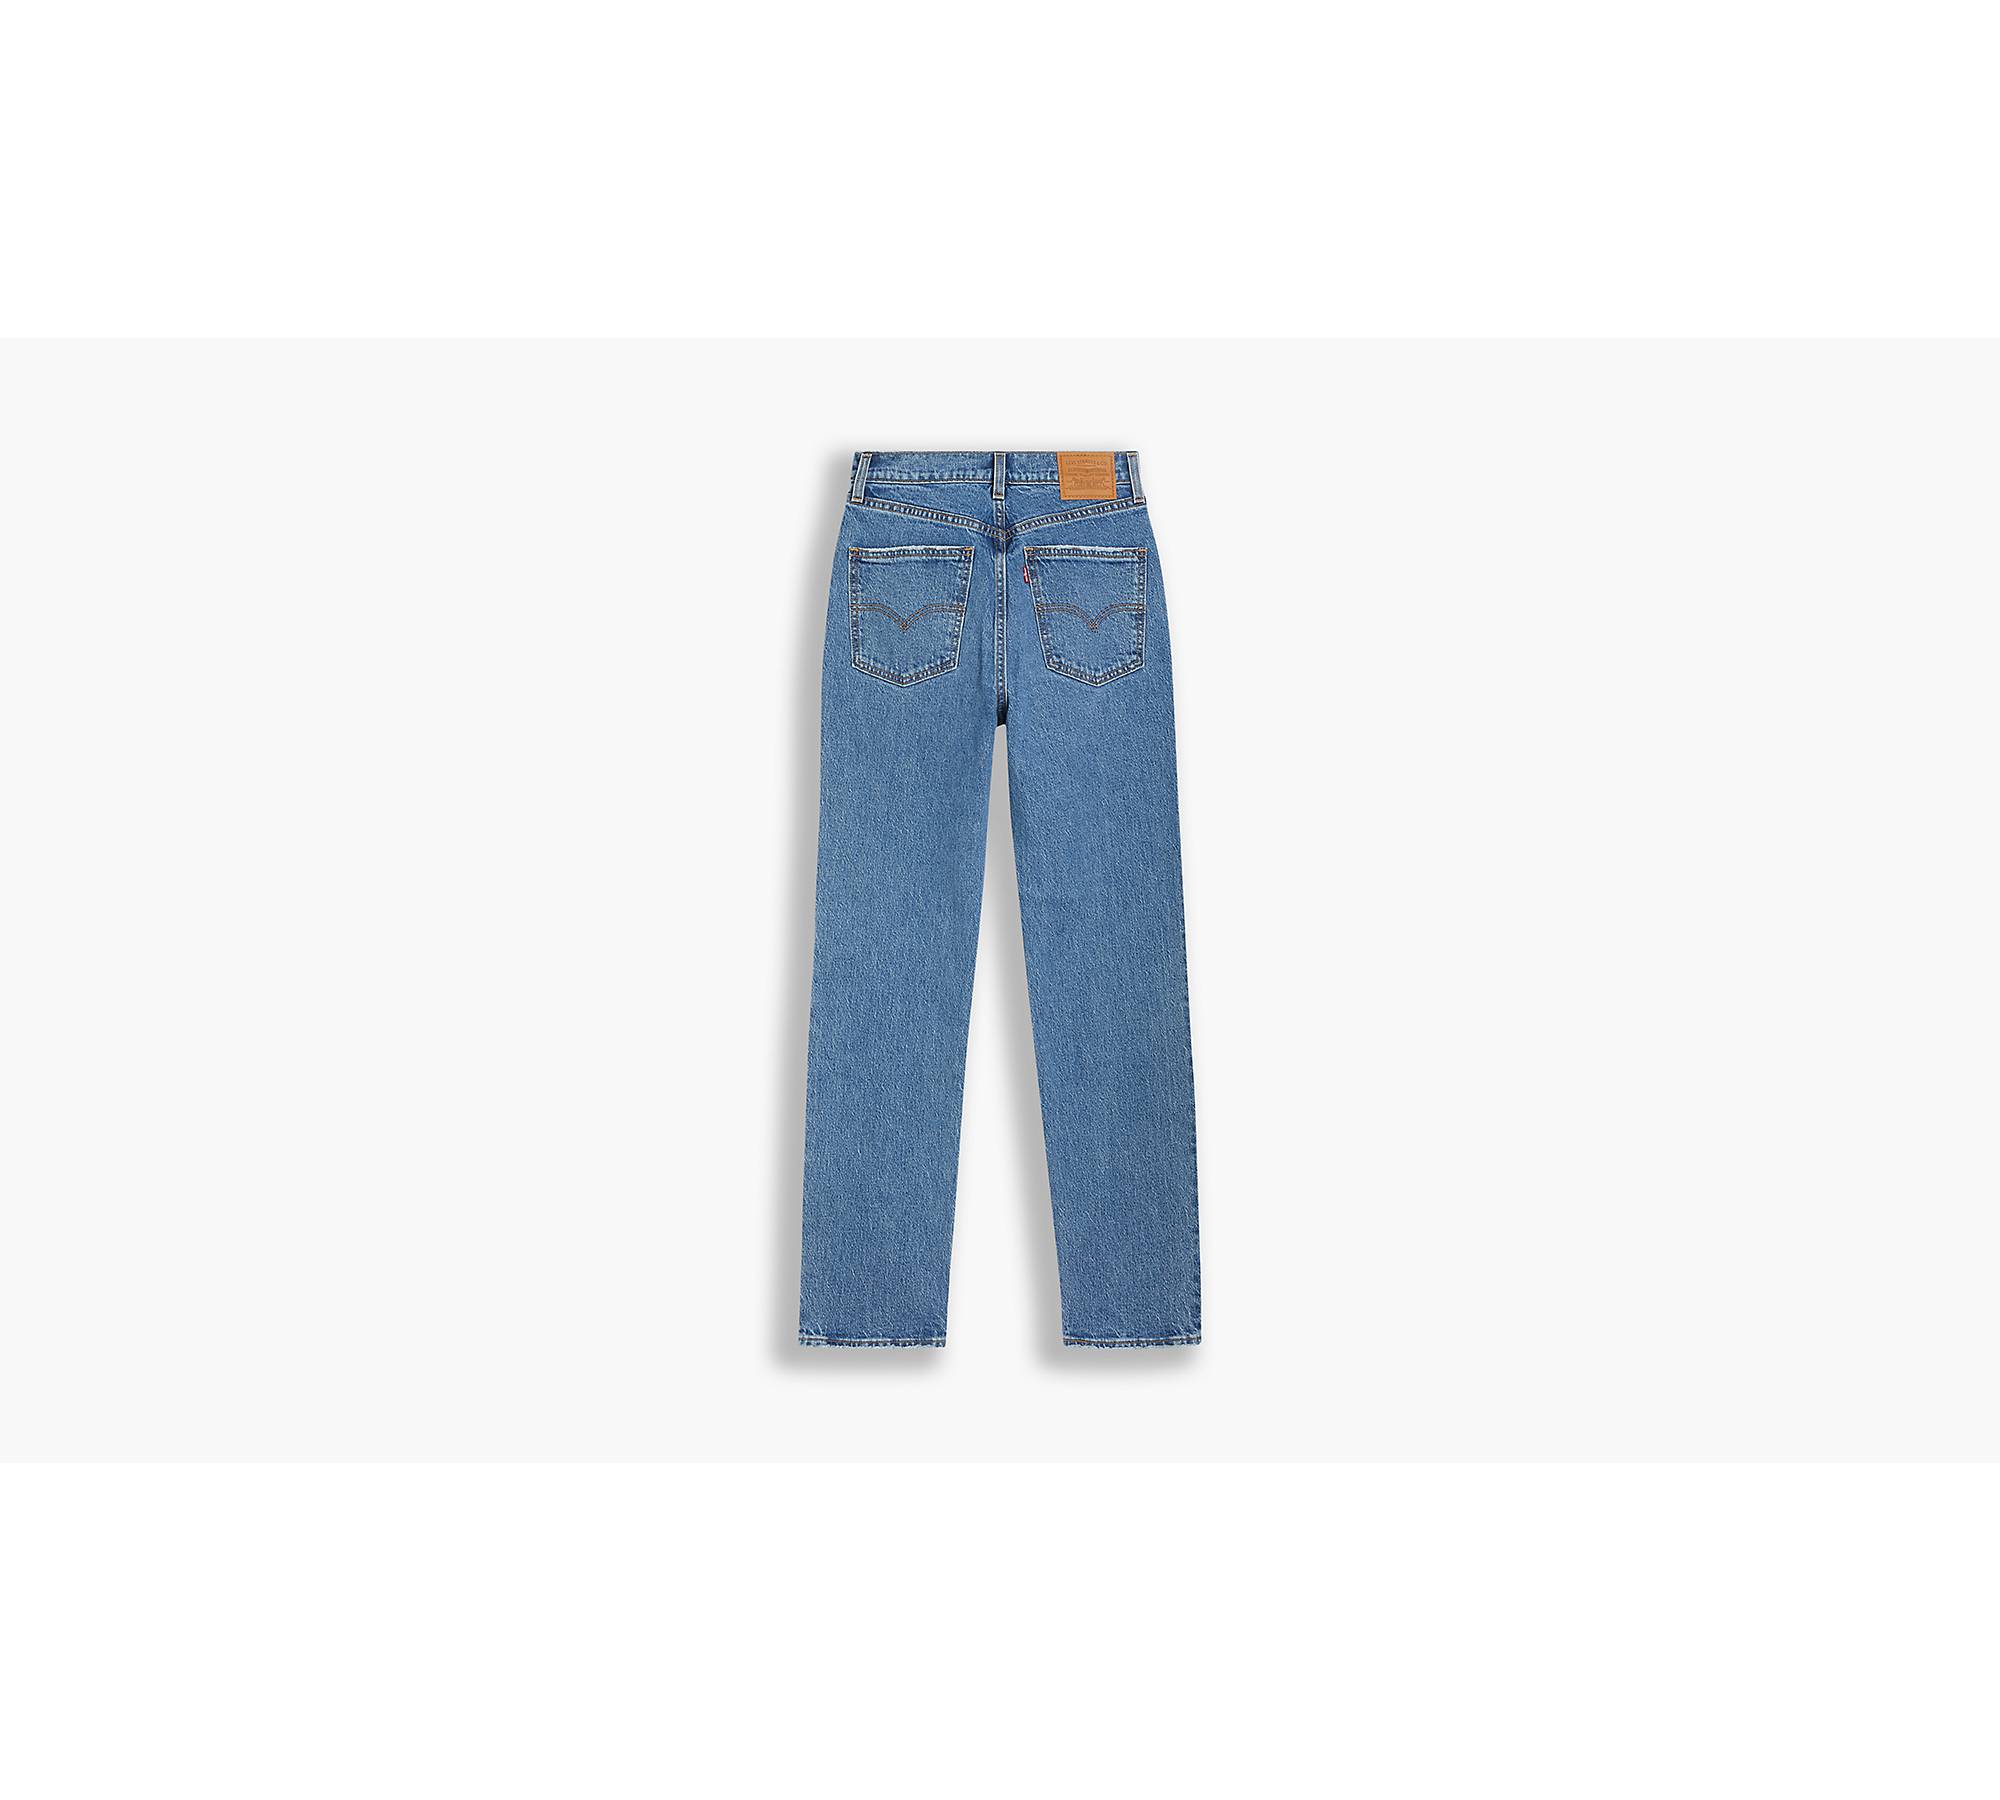 Sonoma original fit mid-rise straight leg jeans